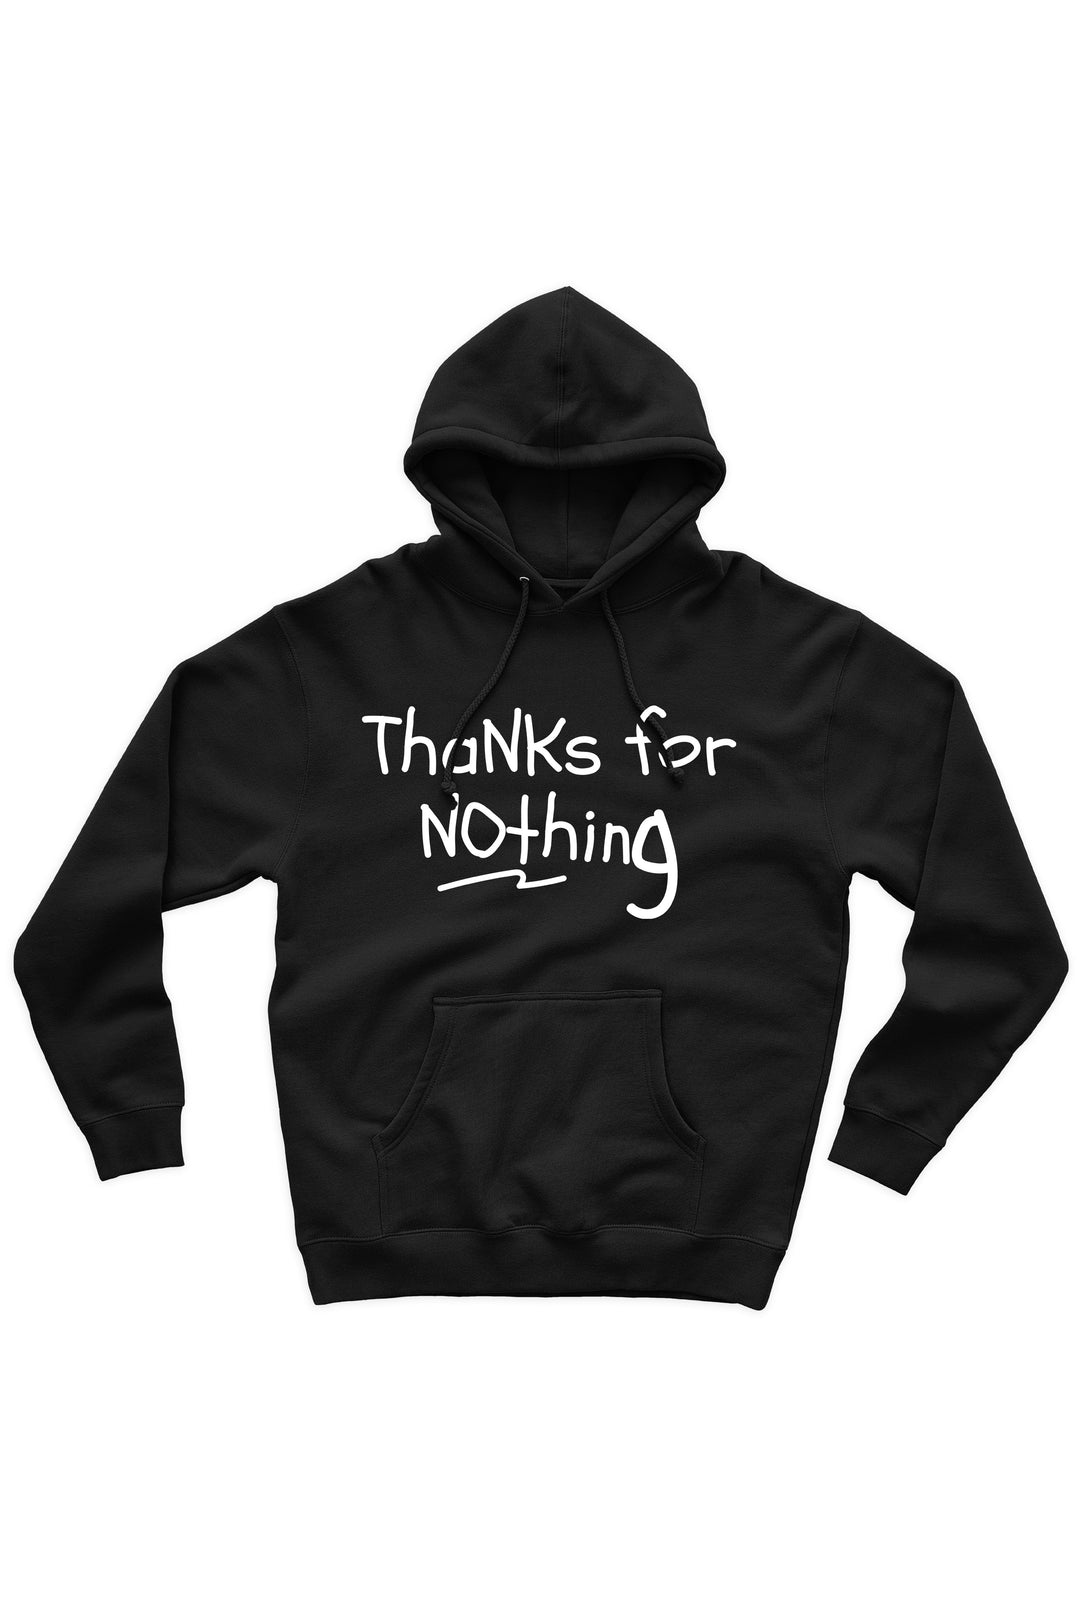 Thanks For Nothing Hoodie (White Logo) - Zamage